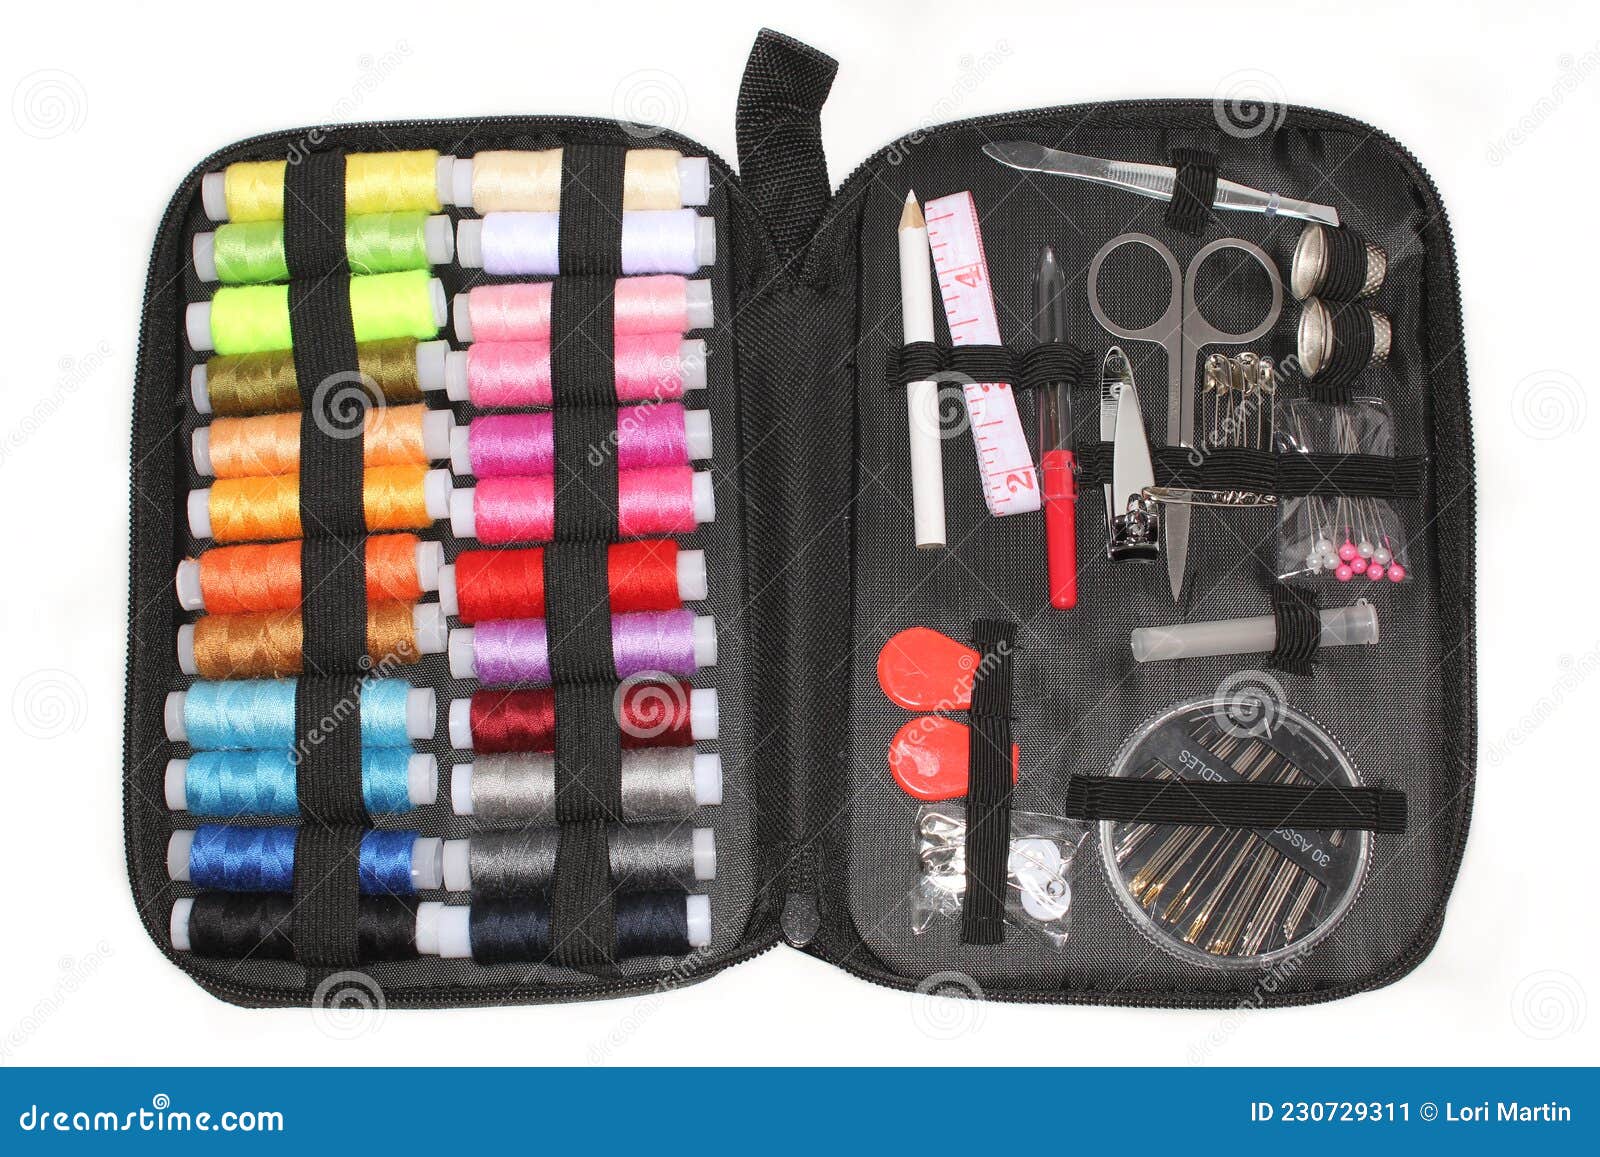 emergency sewing kit, Stock image